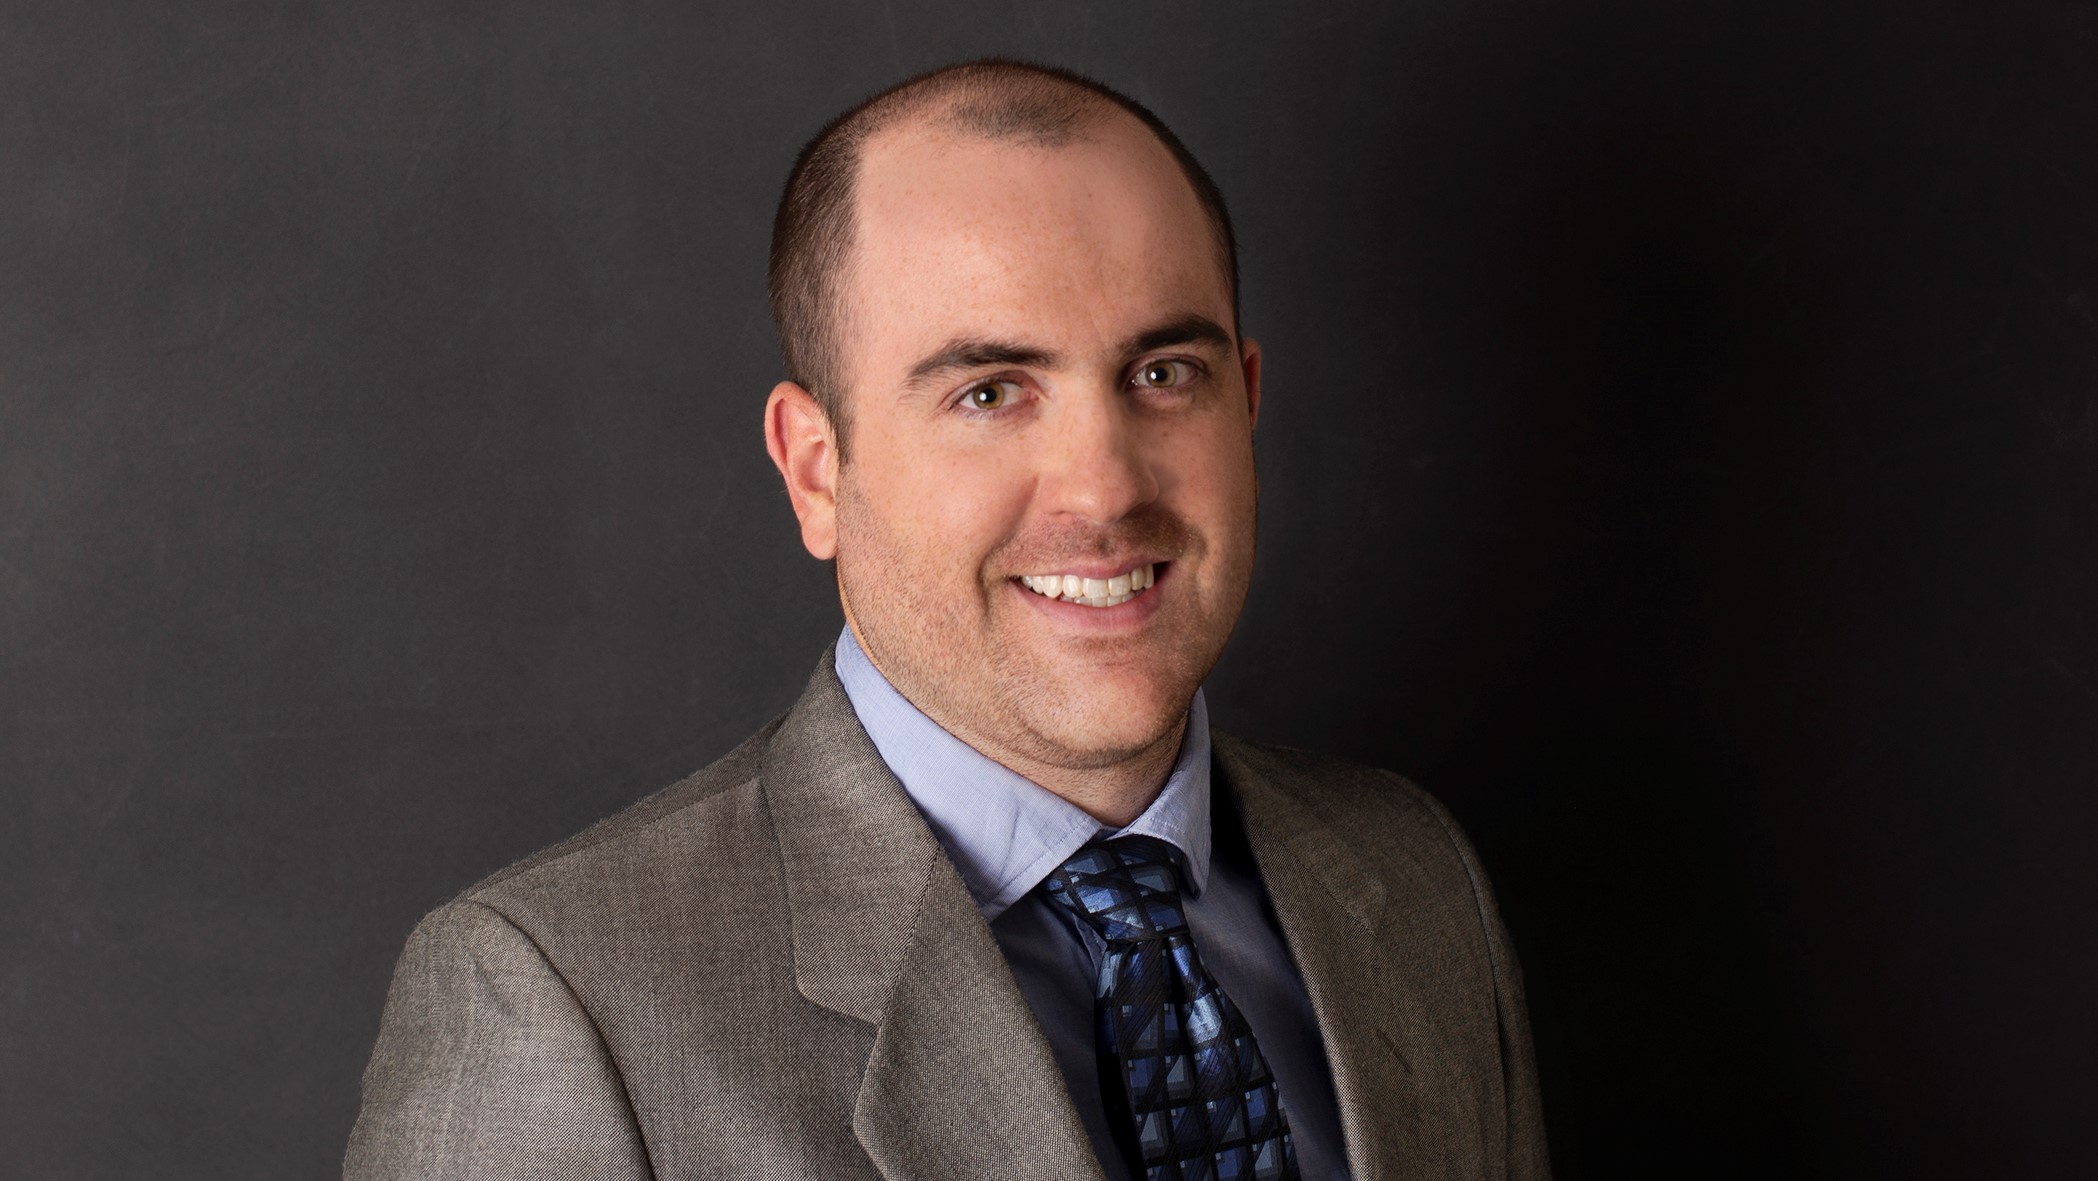 Scott Miller, Associate Marketing Representative, smiles in front of a black background.